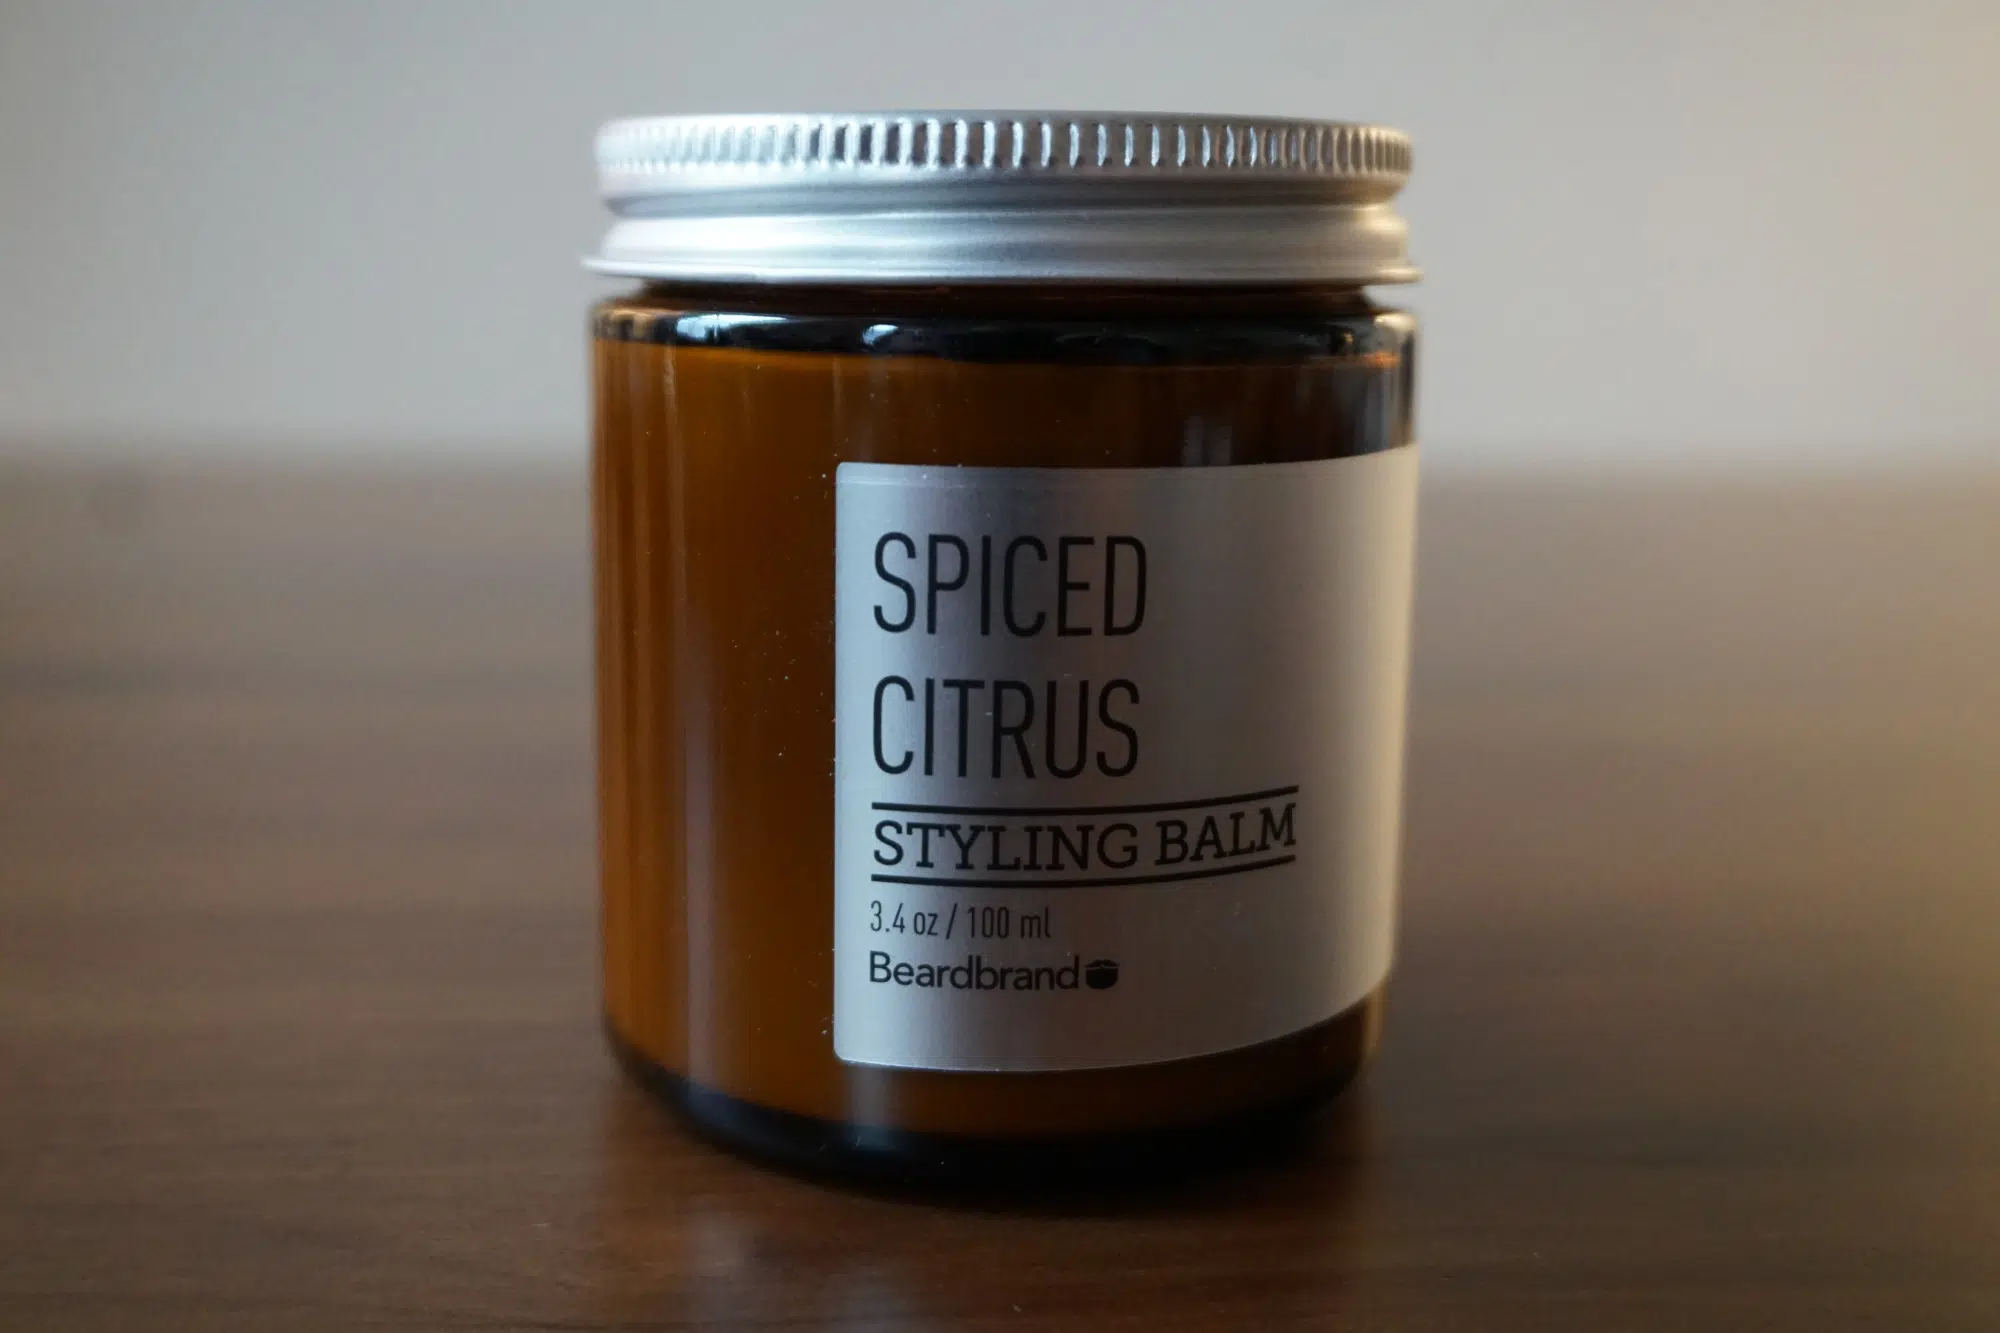 Beardbrand spiced citrus styling balm